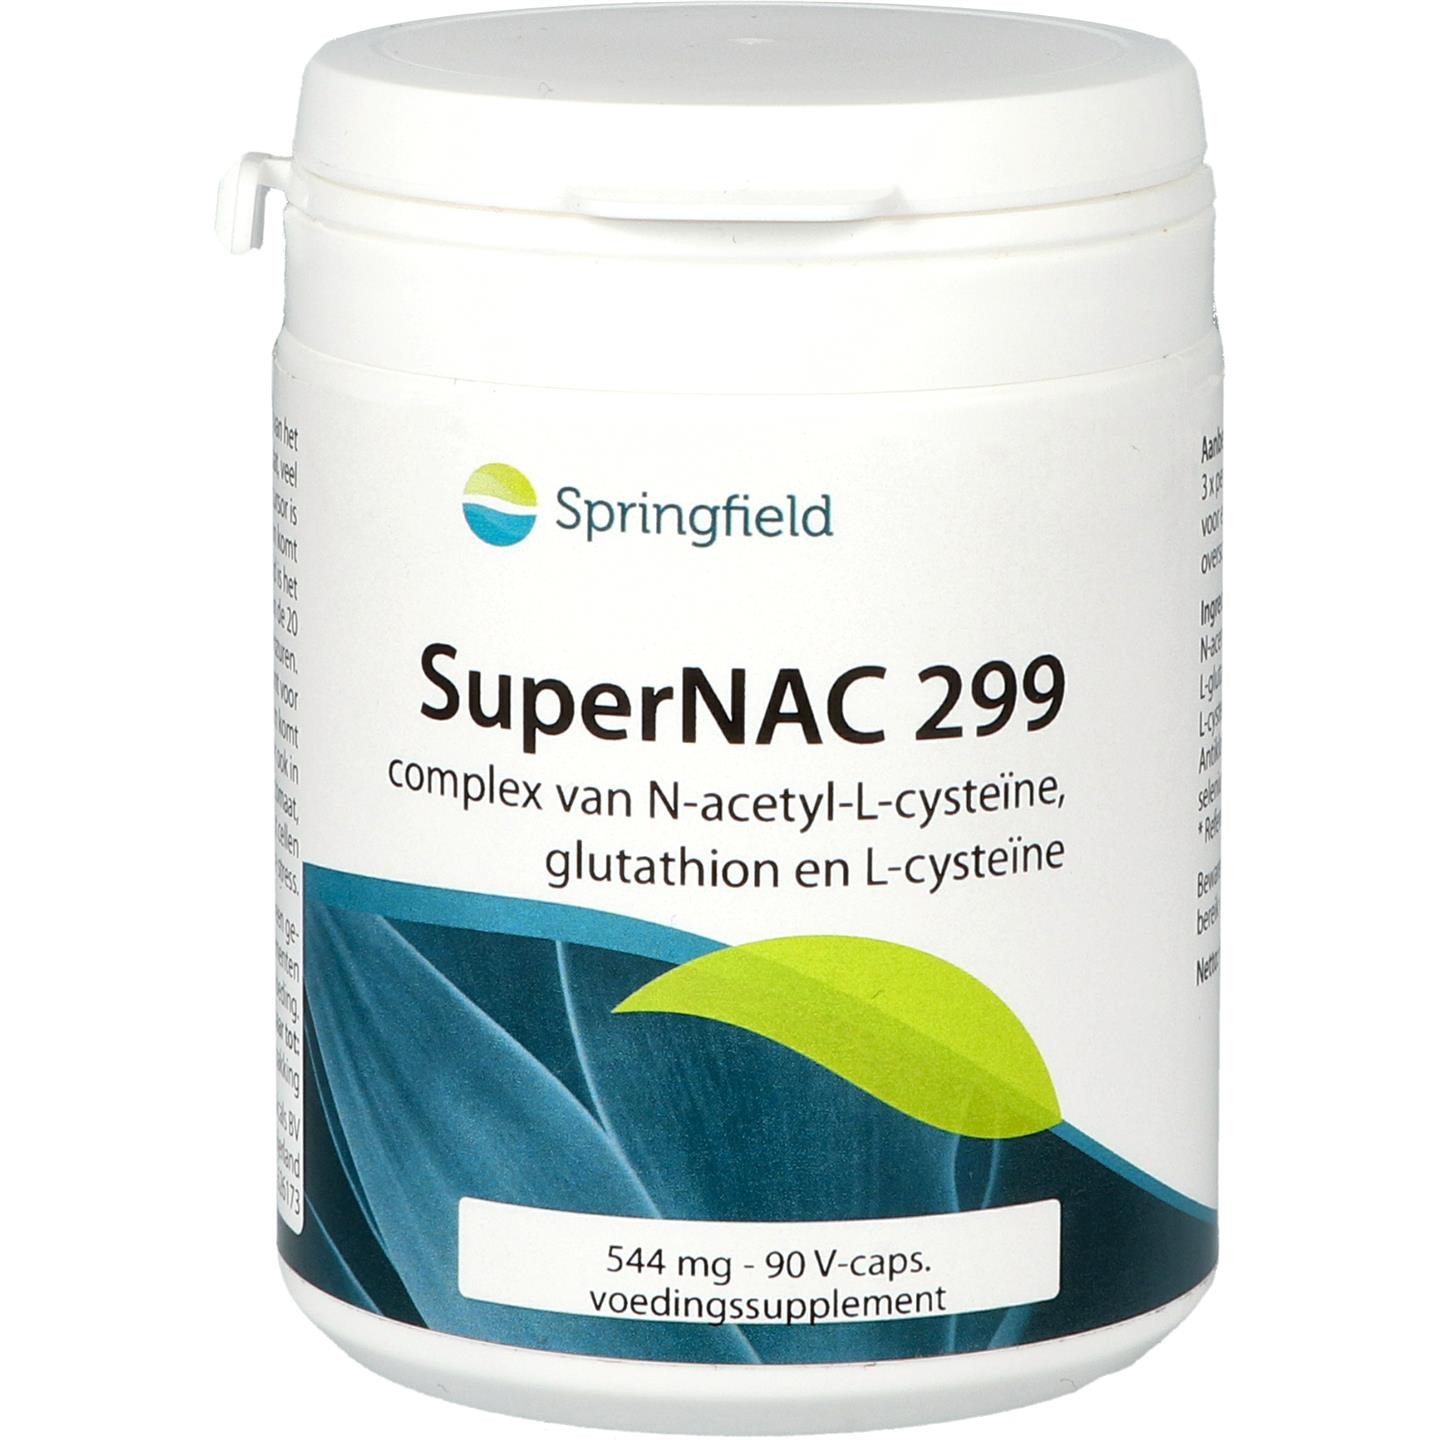 SuperNAC 299